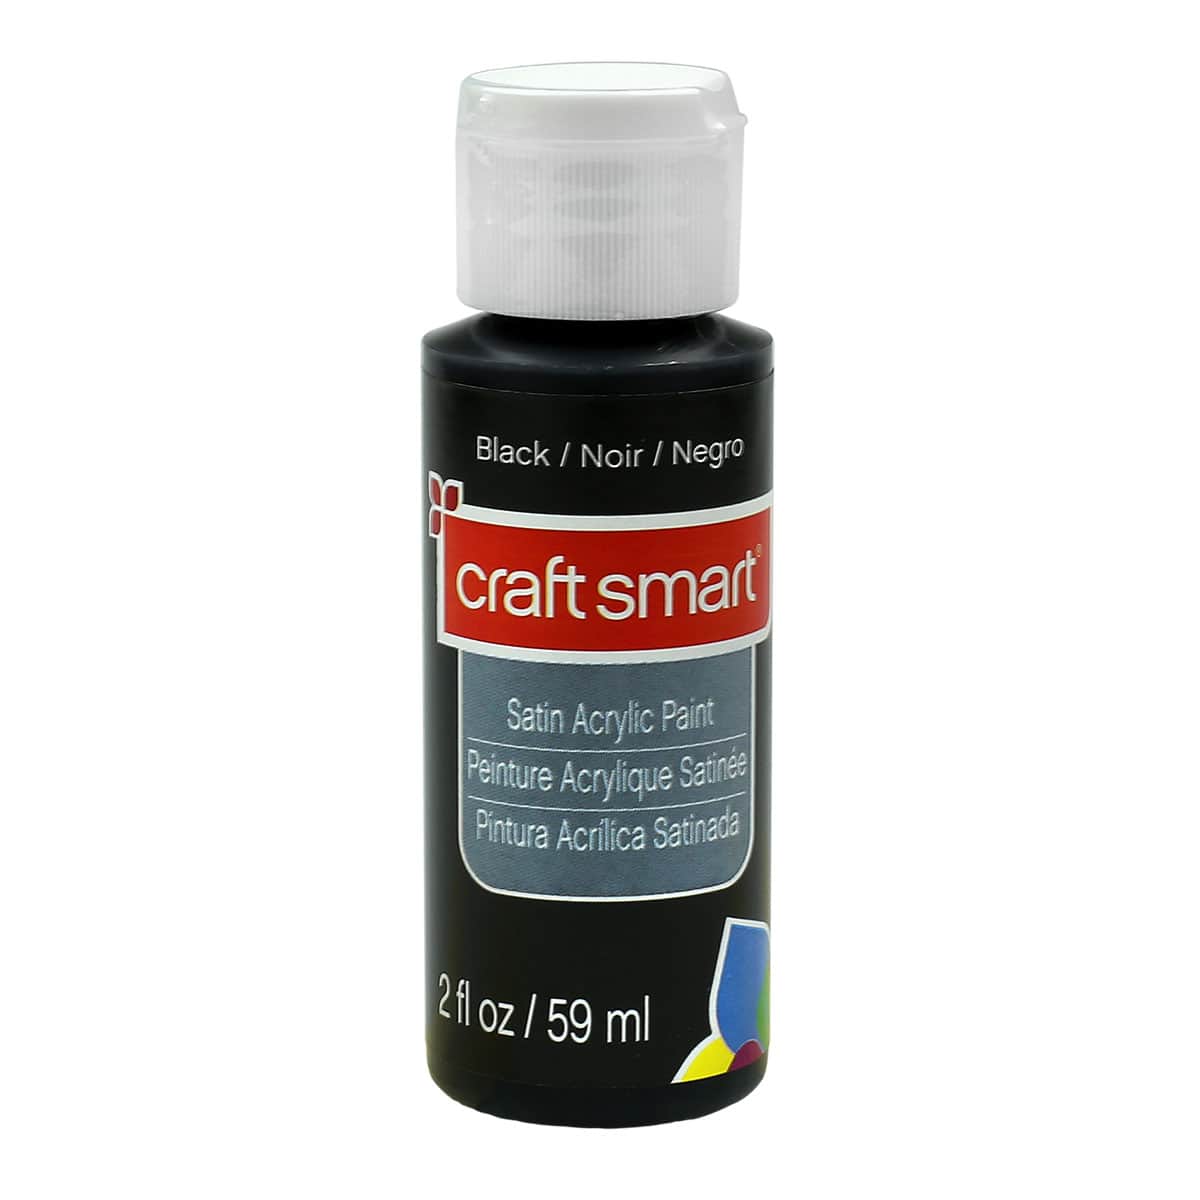 Top Notch 8oz Weather Resistant Acrylic Craft Paint - Black - Craft Paint - Art Supplies & Painting